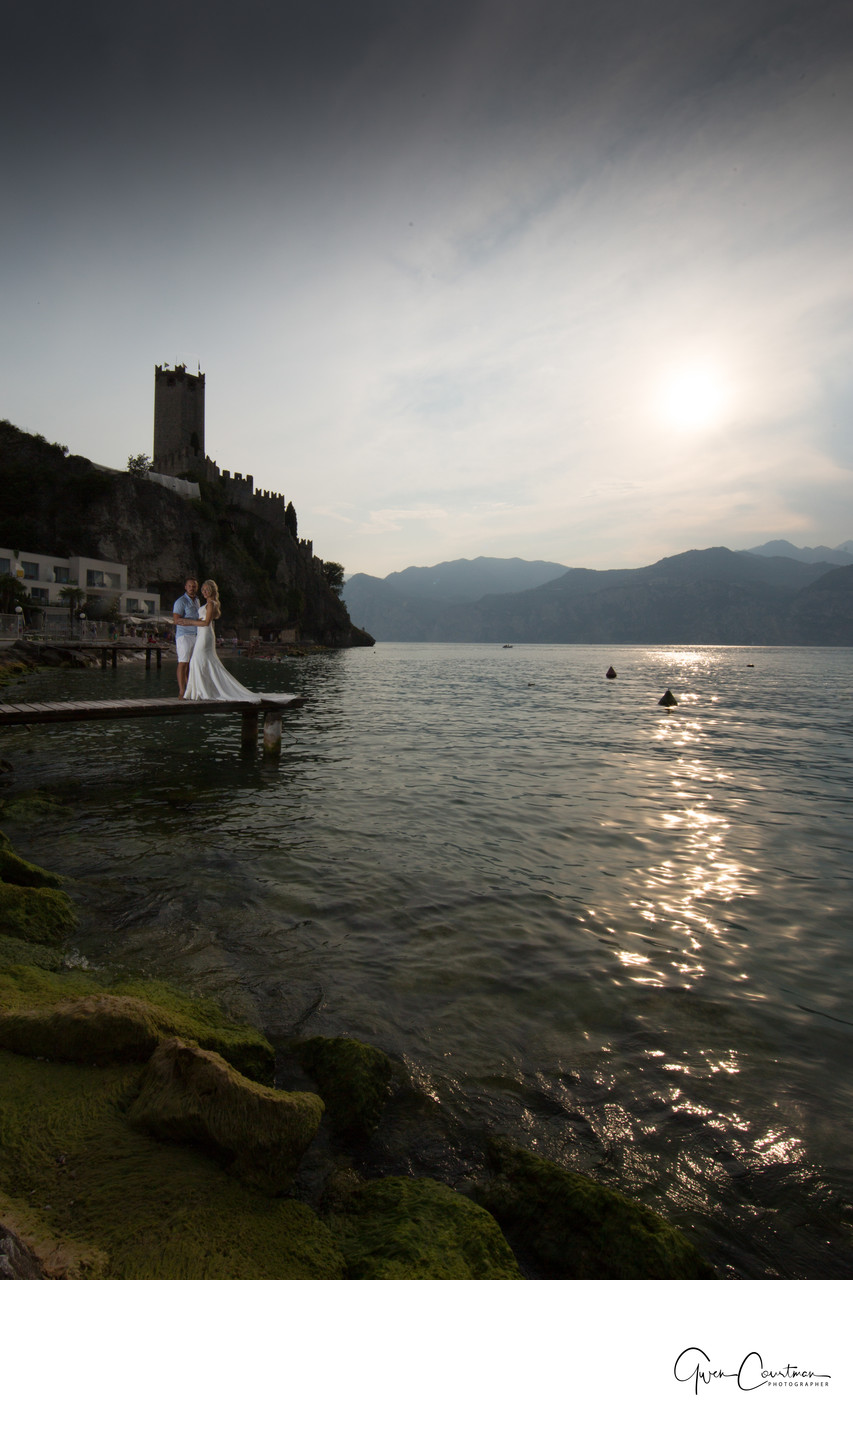 Evening Shots by the Lake, Malcesine, Lake Garda, Italy